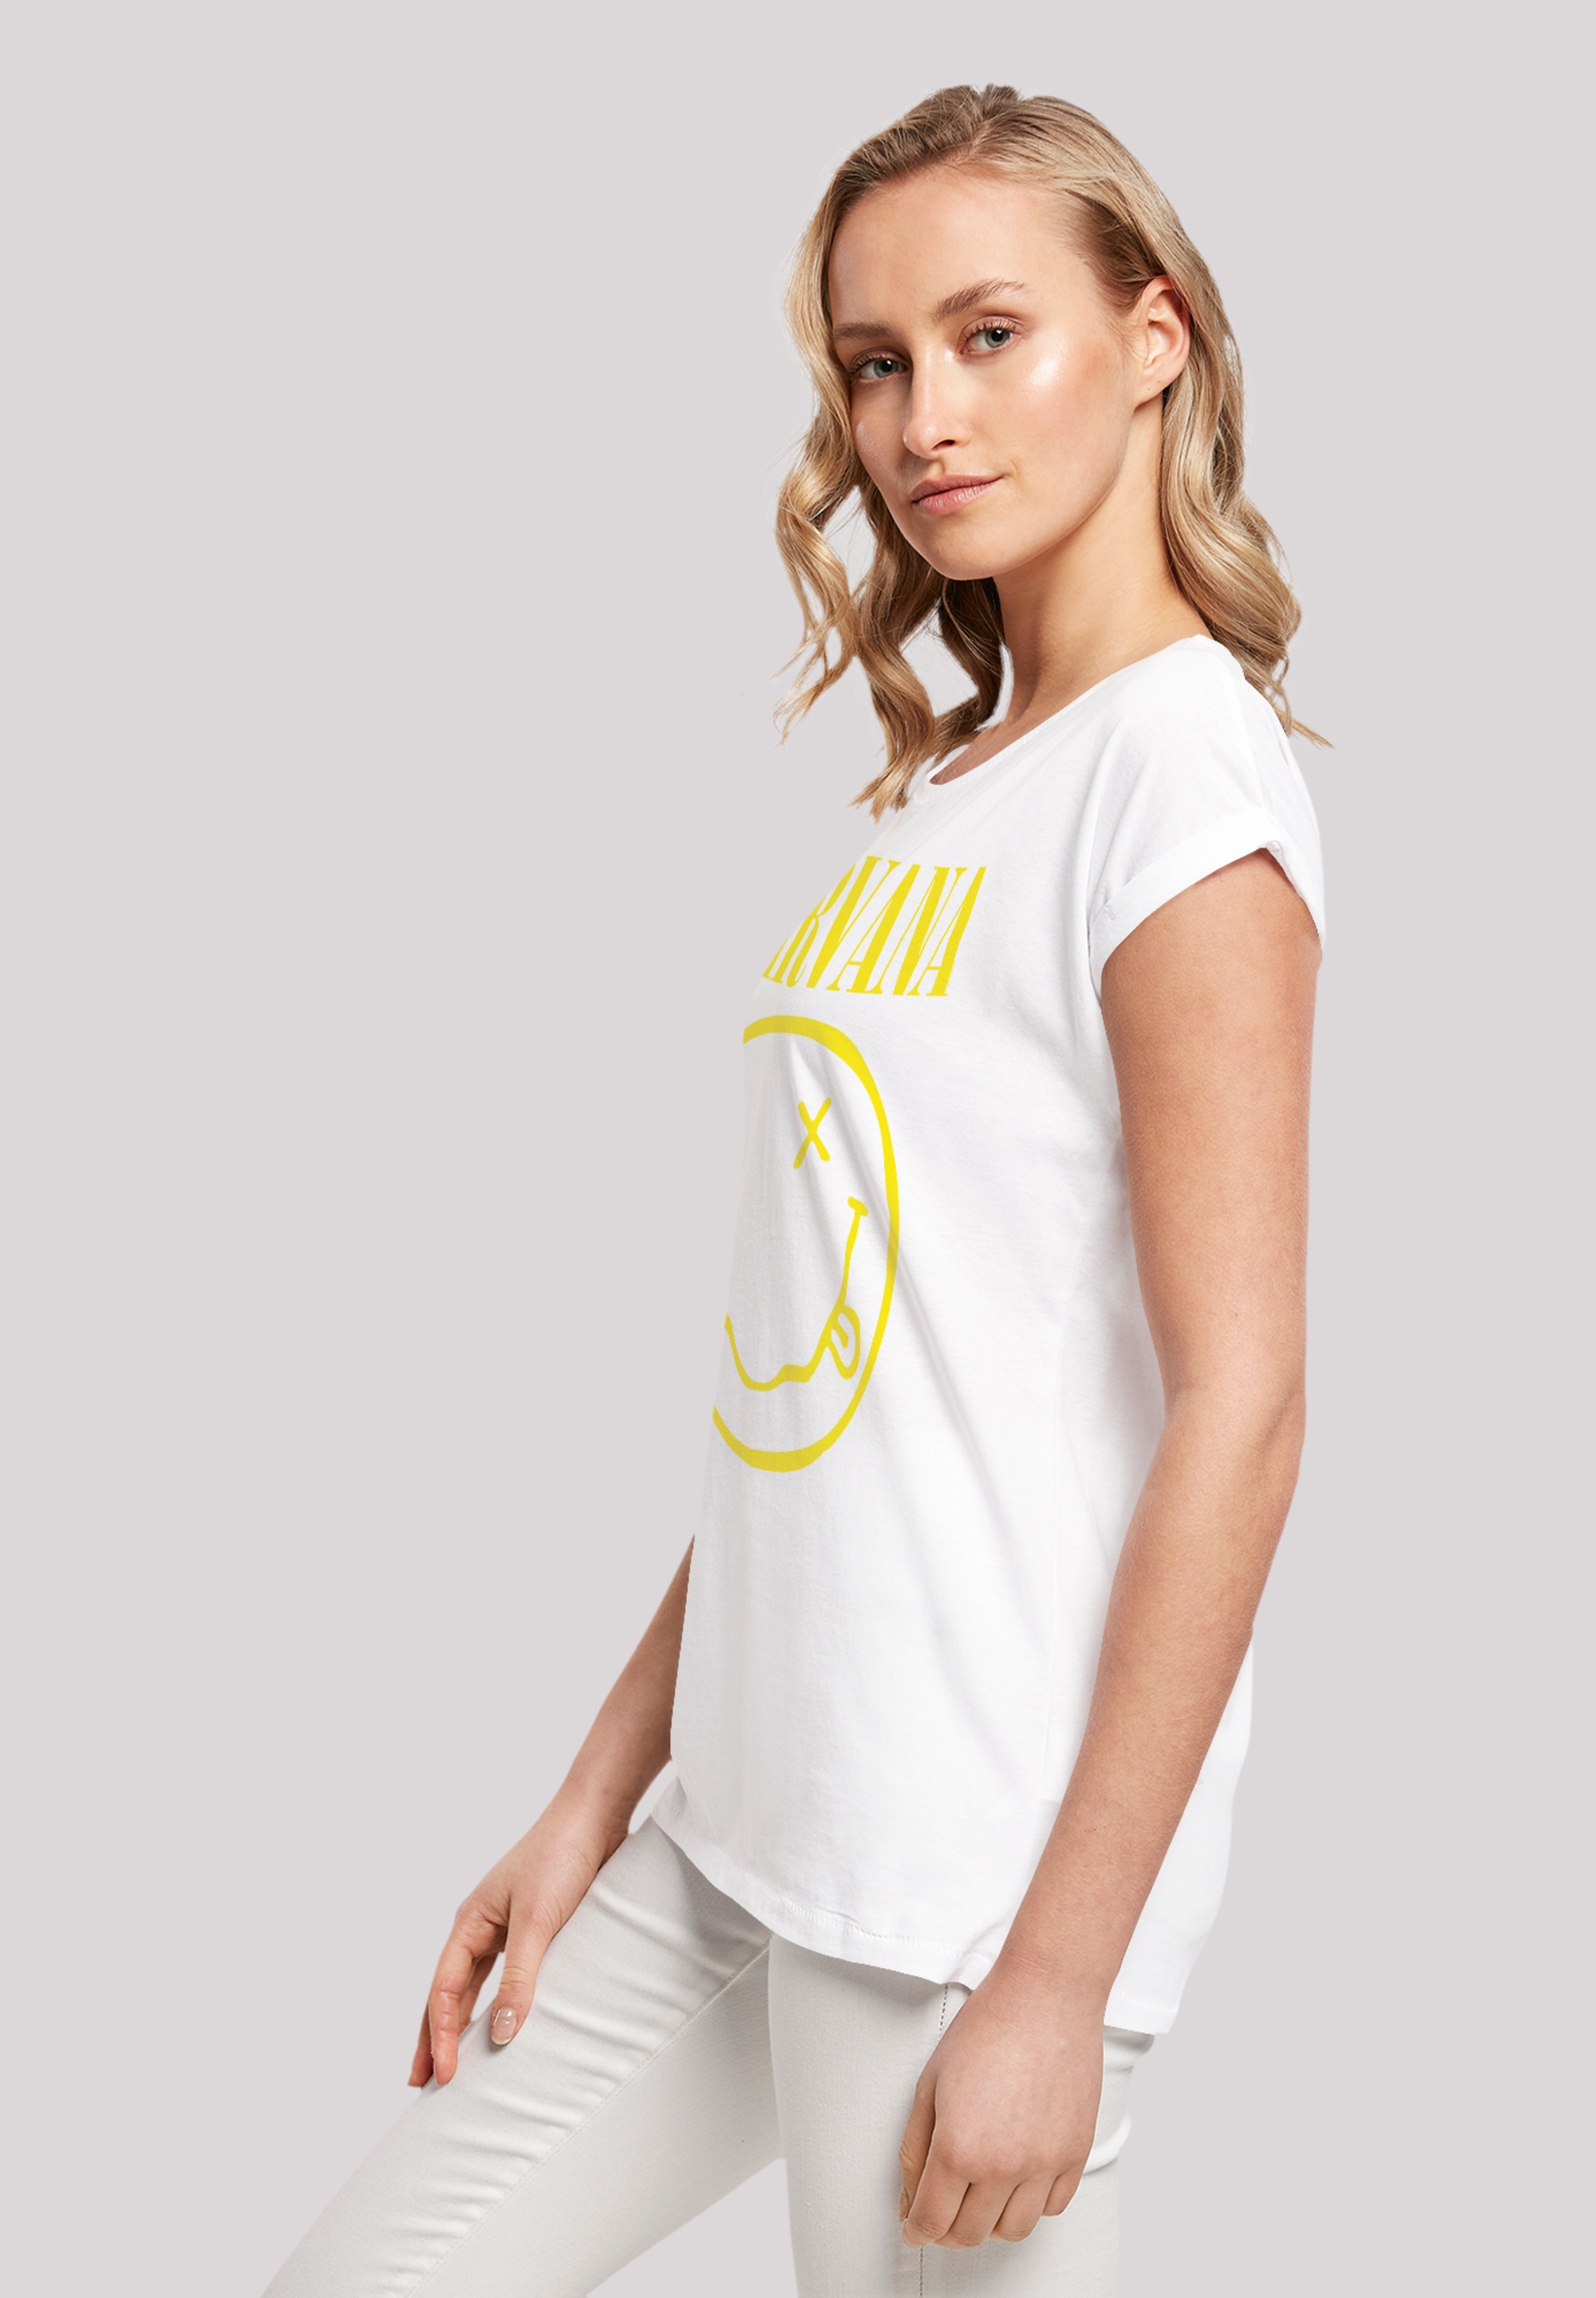 F4NT4STIC T-Shirt »Nirvana Rock Band Yellow Happy Face«, Premium Qualität  online kaufen | I'm walking